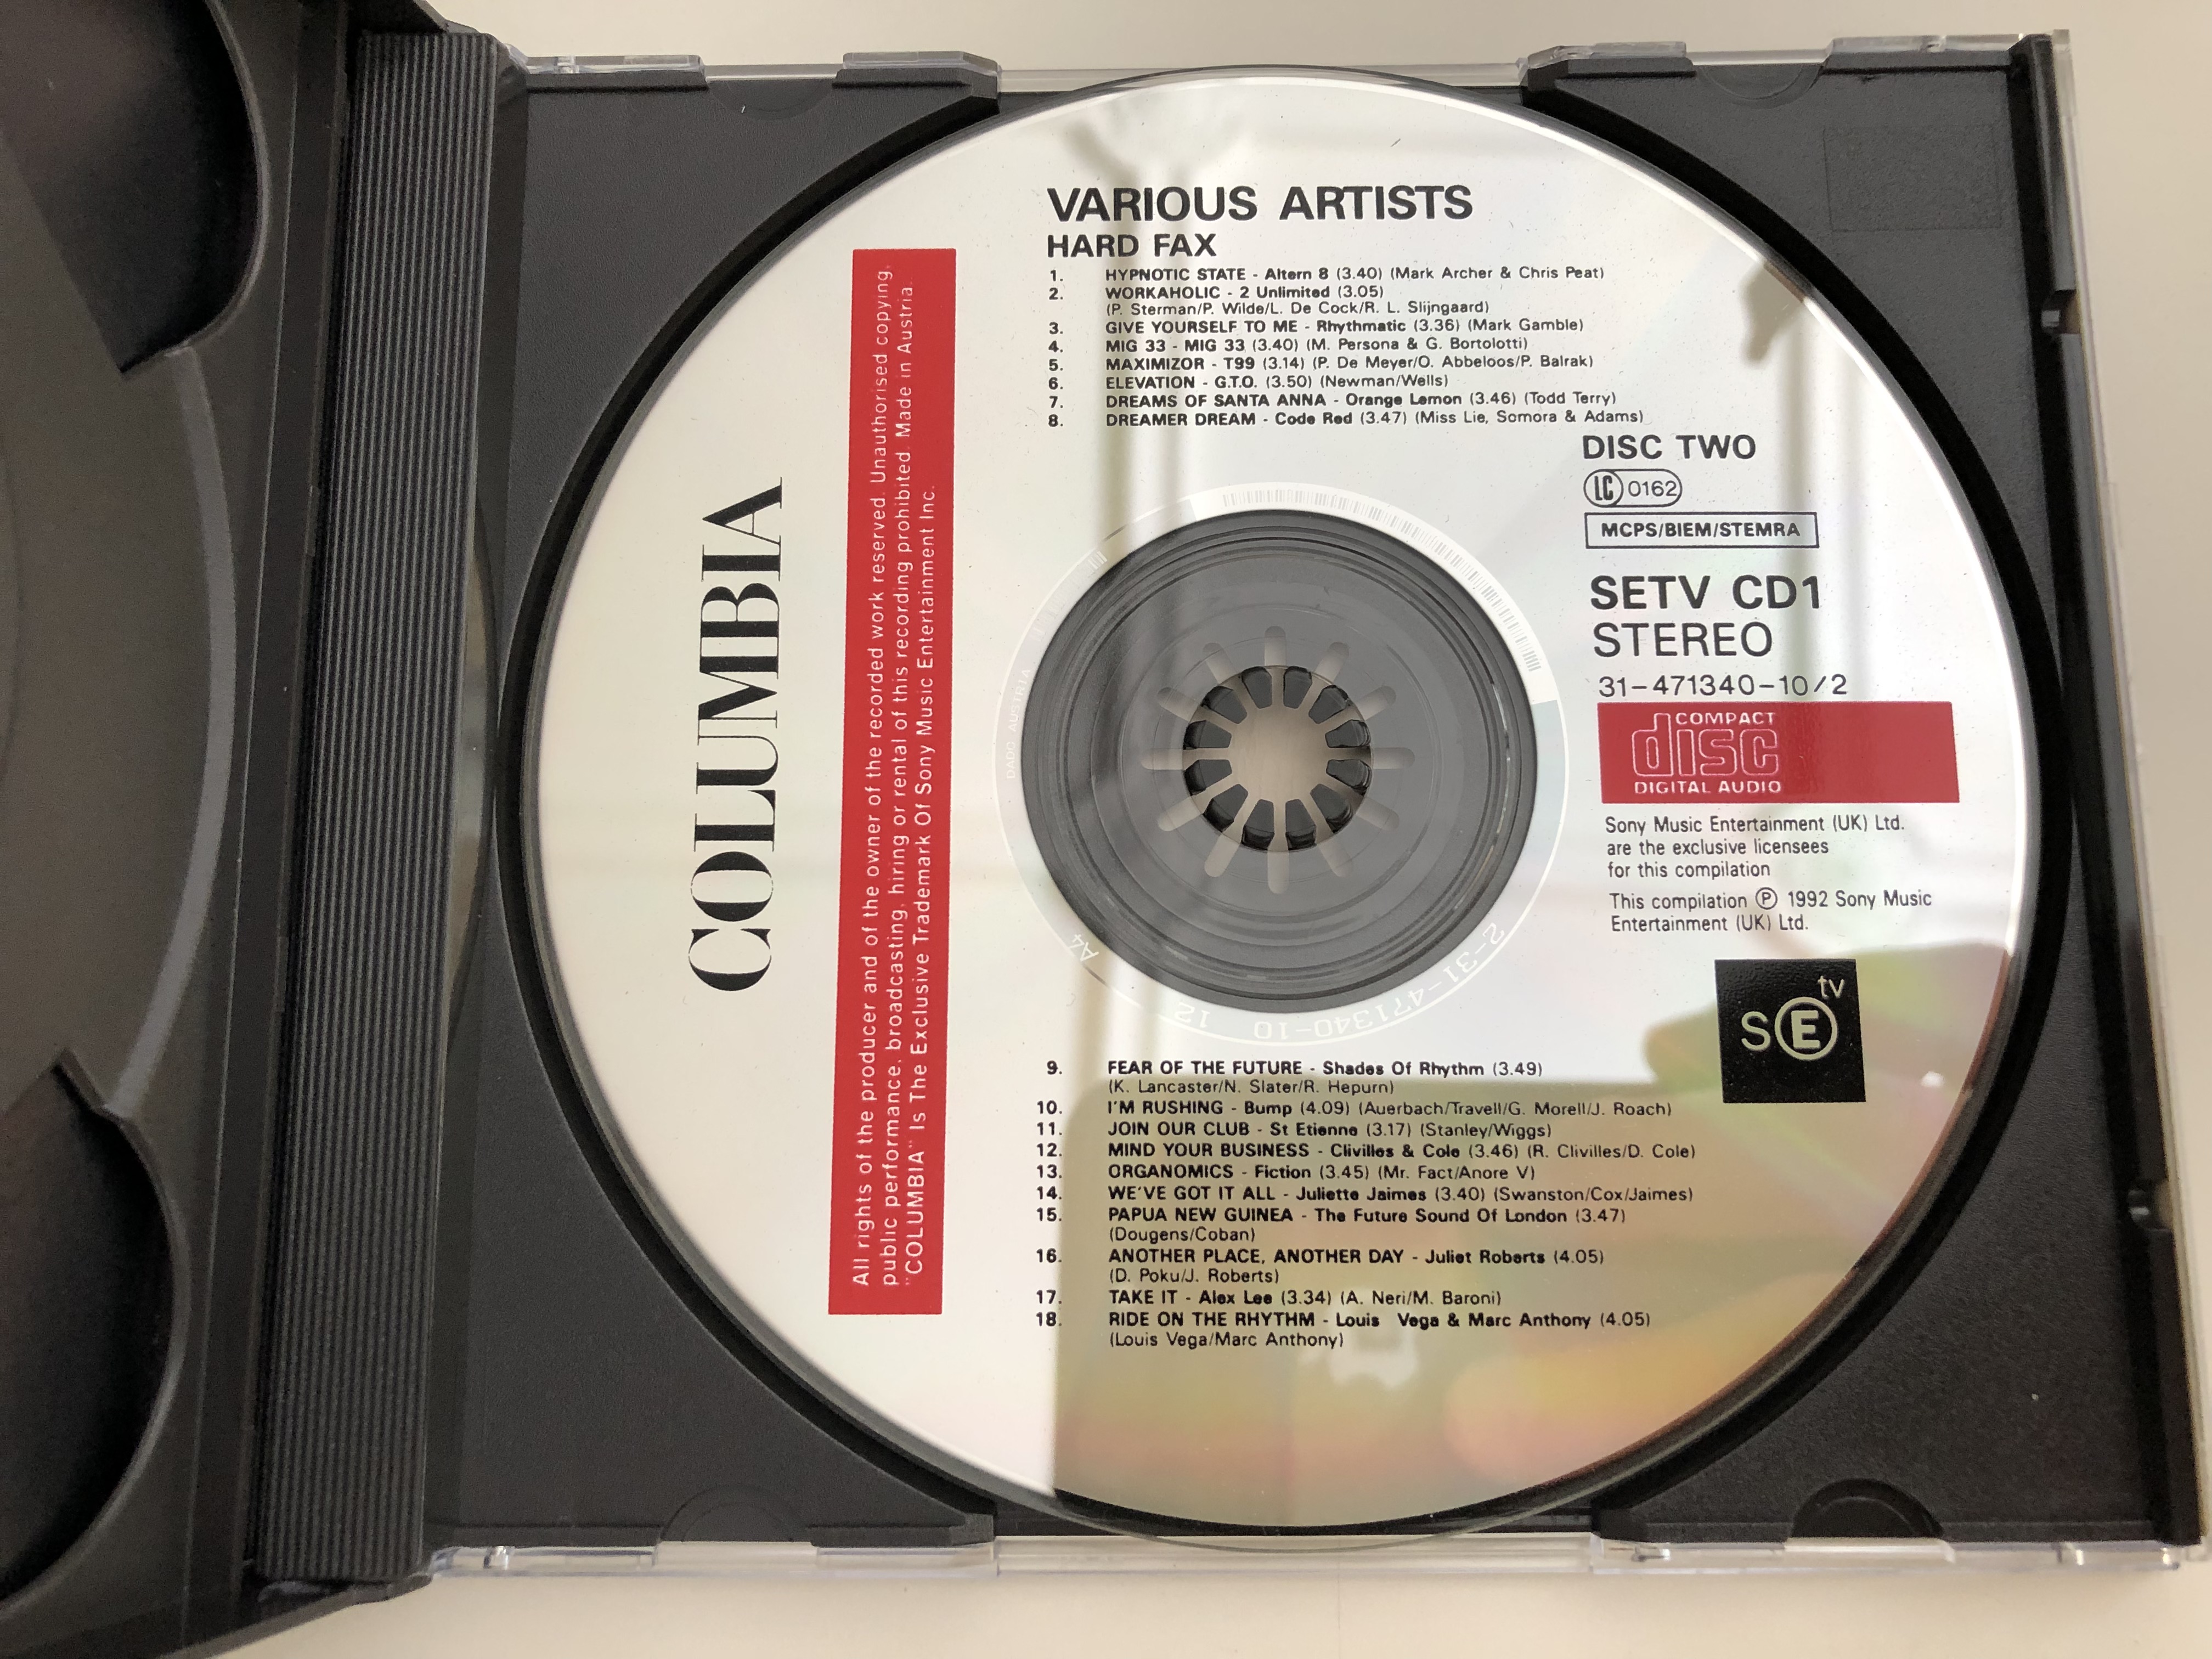 hard-fax-36-greatest-club-hits-featuring-stella-jam-spoon-hypnotic-st-8-workaholic-shades-of-rhythm-2x-audio-cd-1992-columbia-setv-cd1-6-.jpg